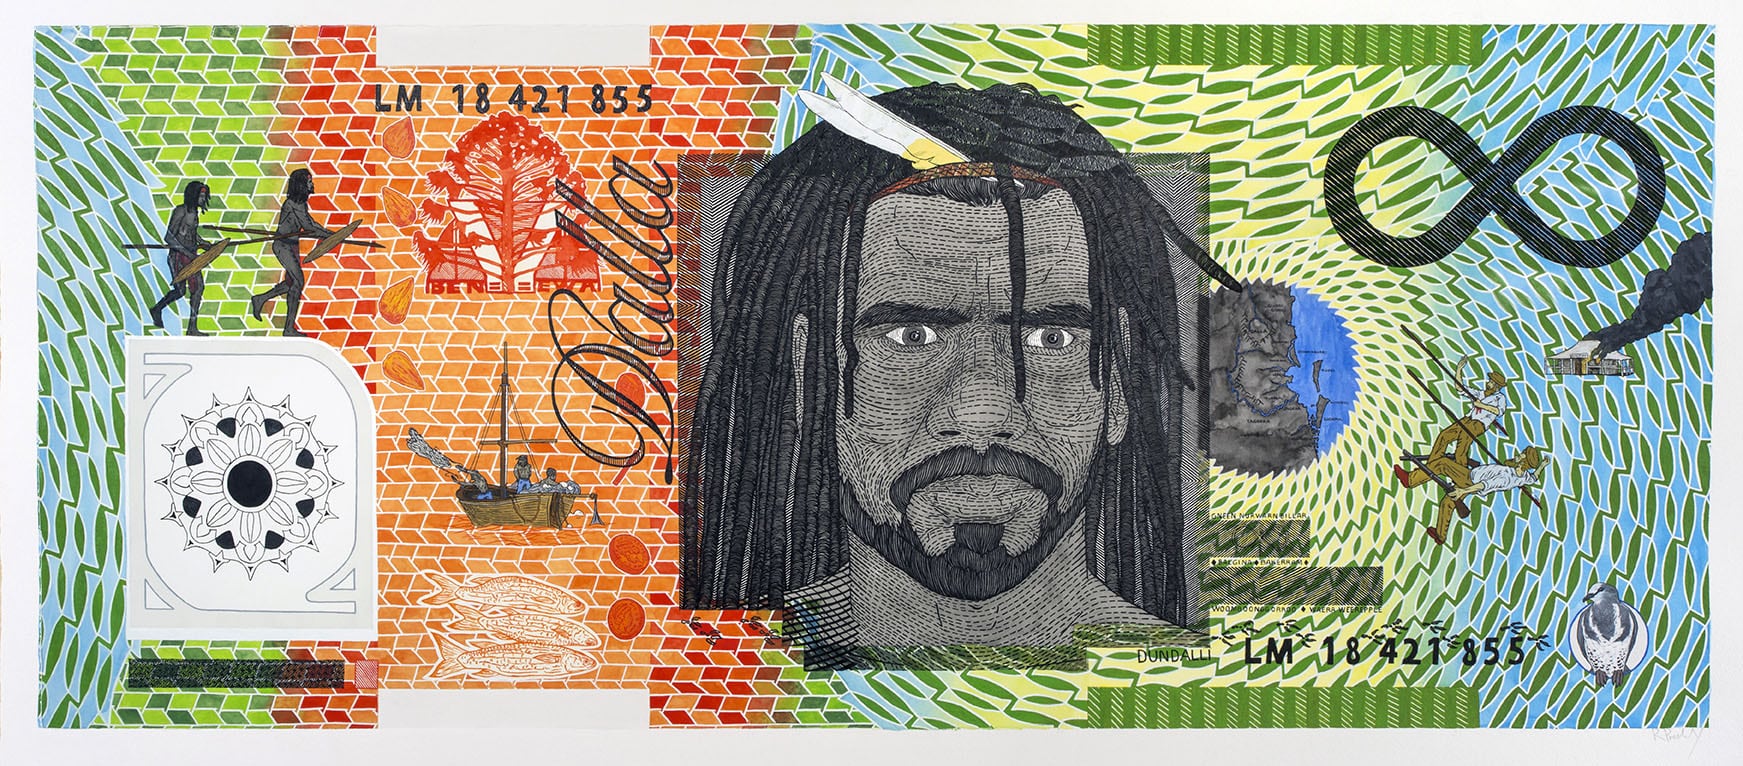 Image 01: Ryan Presley *Infinite Dollar Note - Dundalli Commemorative* 2017, watercolour on arches paper, 126x187cm. Photo: Carl Warner.